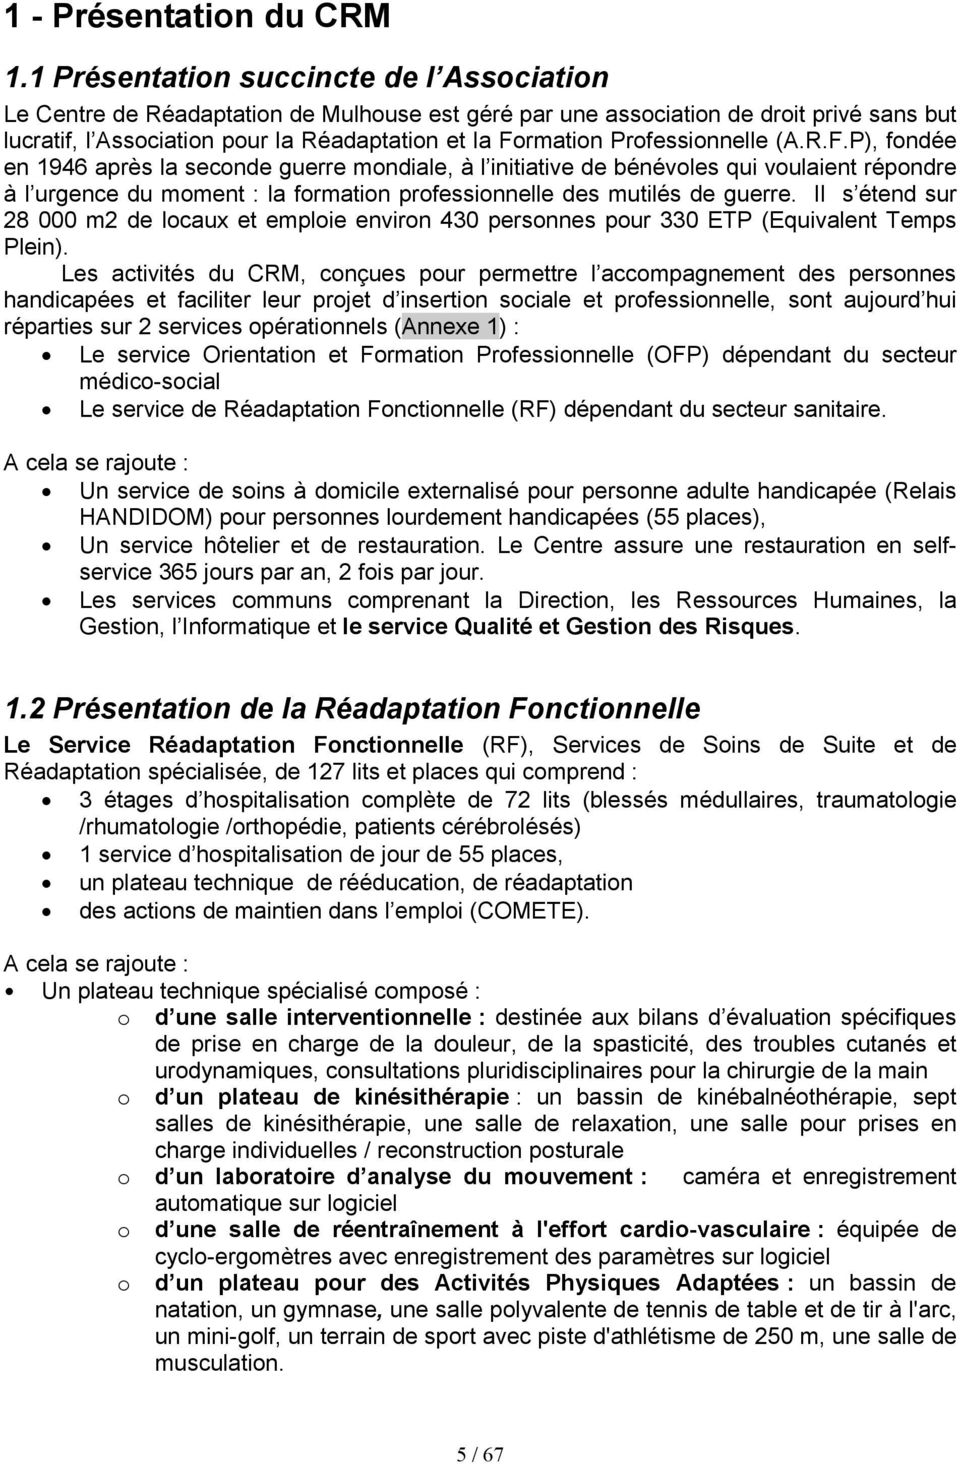 Professionnelle (A.R.F.